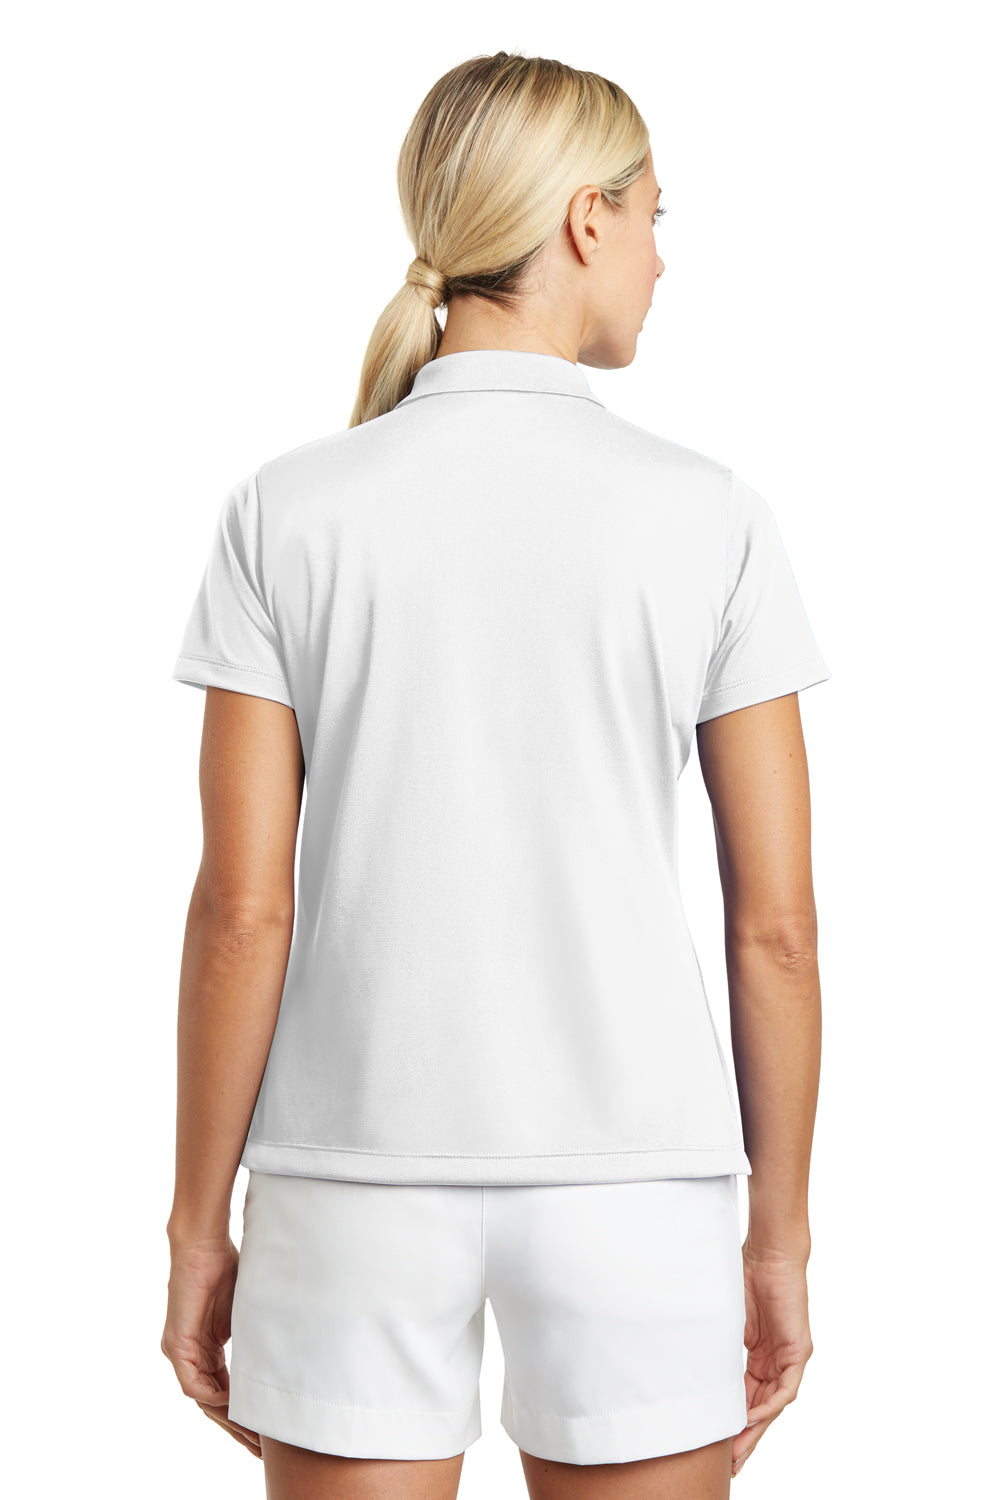 Nike 203697 Womens Tech Basic Dri-Fit Moisture Wicking Short Sleeve Polo Shirt White Model Back